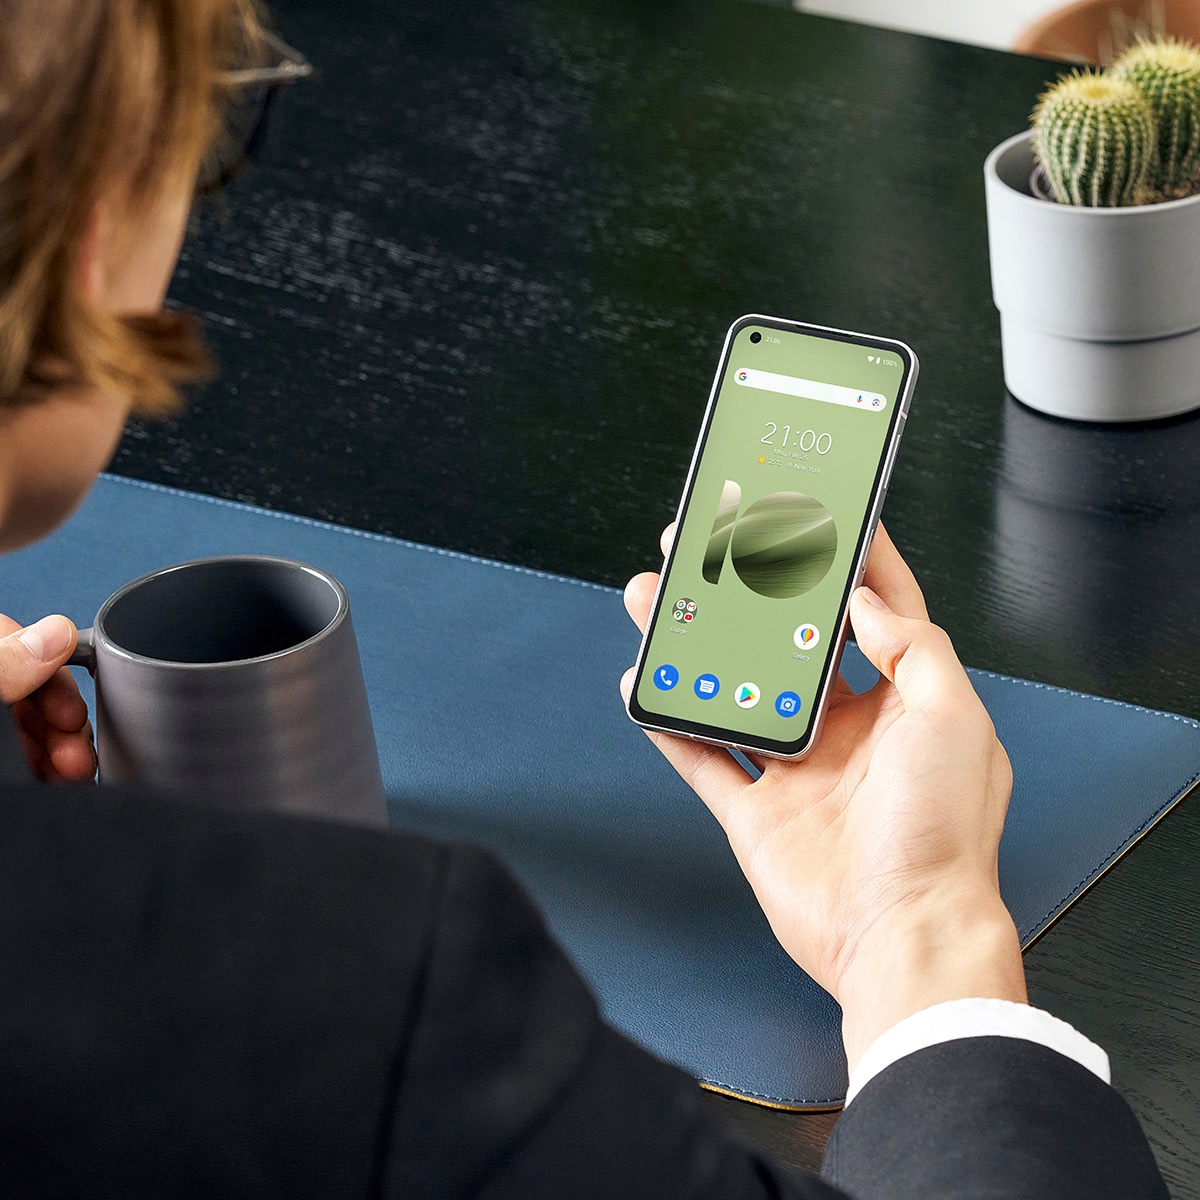 Asus Smartphone »ZENFONE 10«, grün, 14,98 cm/5,9 Zoll, 256 GB Speicherplatz, 50 MP Kamera